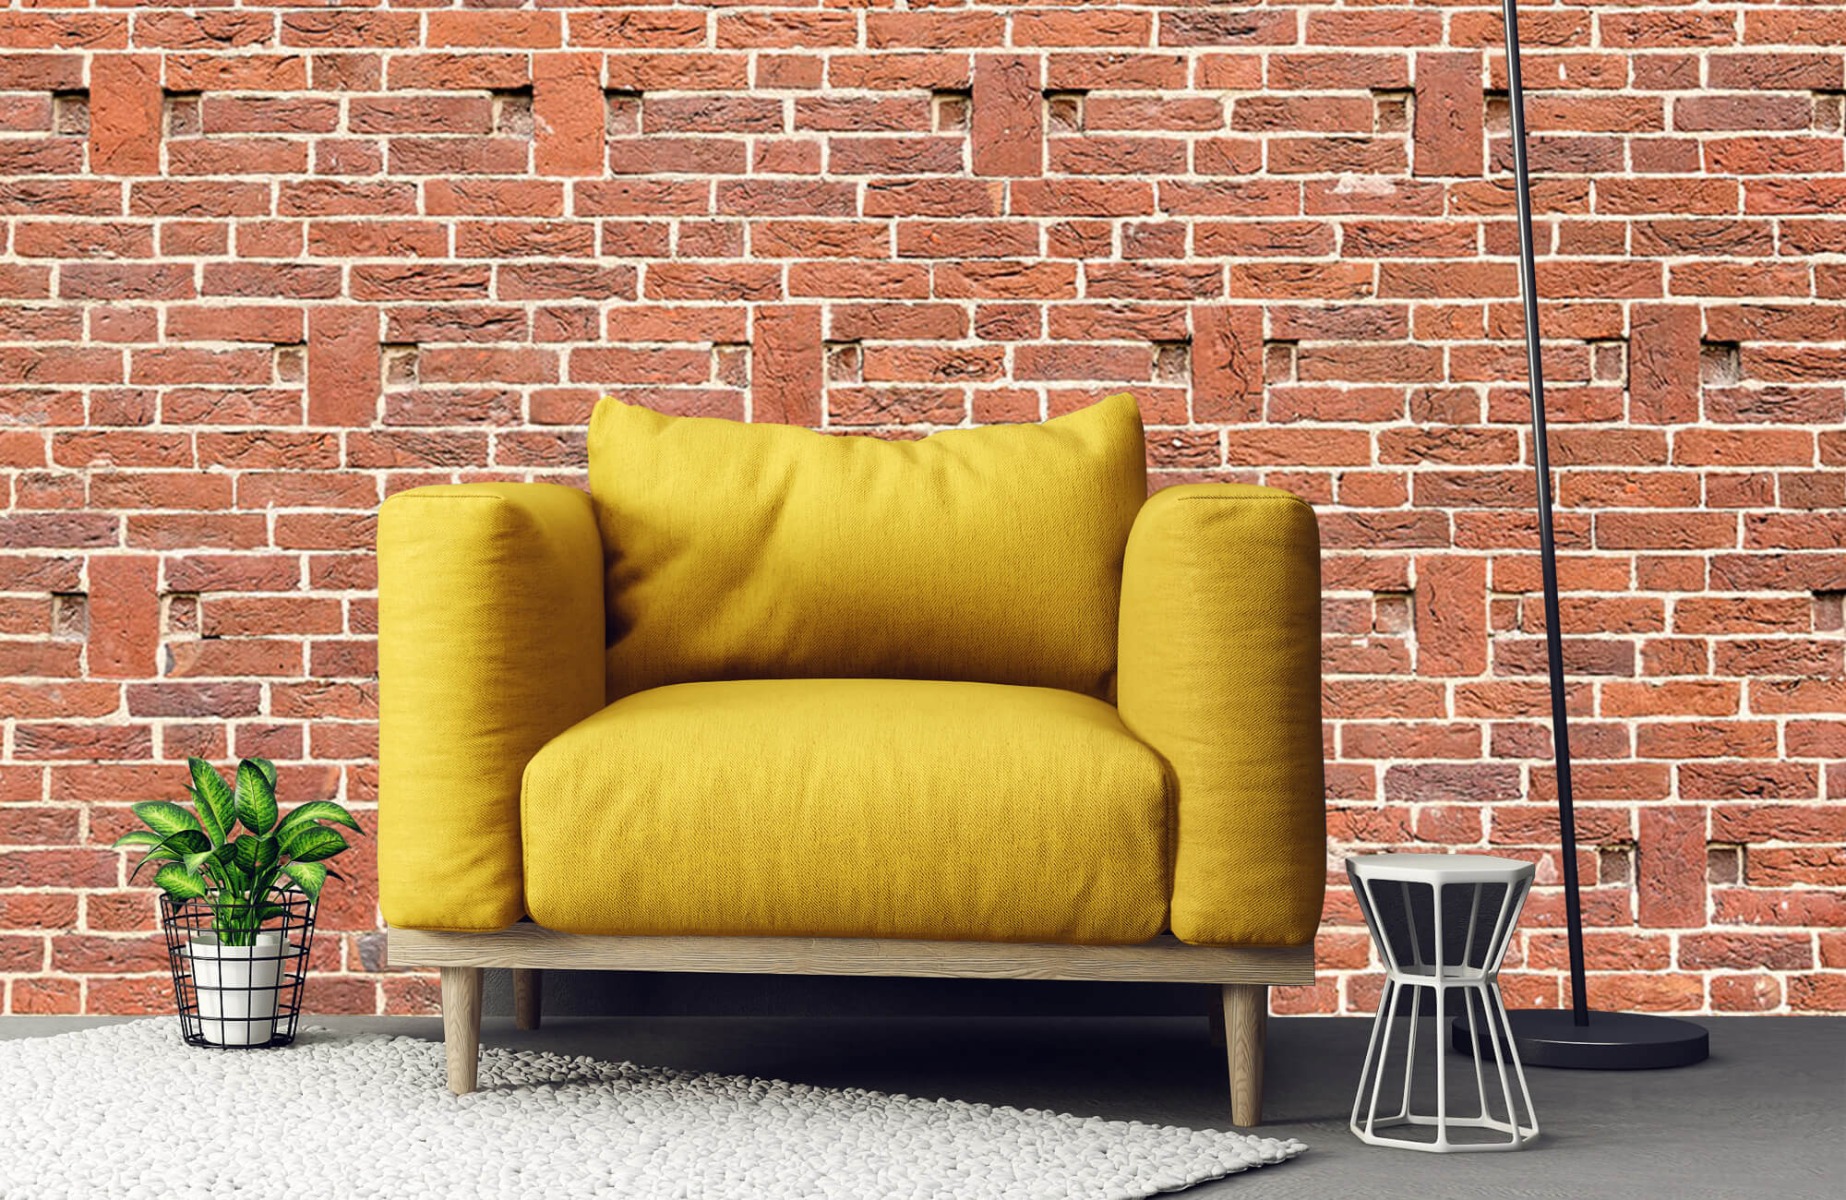 Stone wallpaper - Red stones  - Living room 21